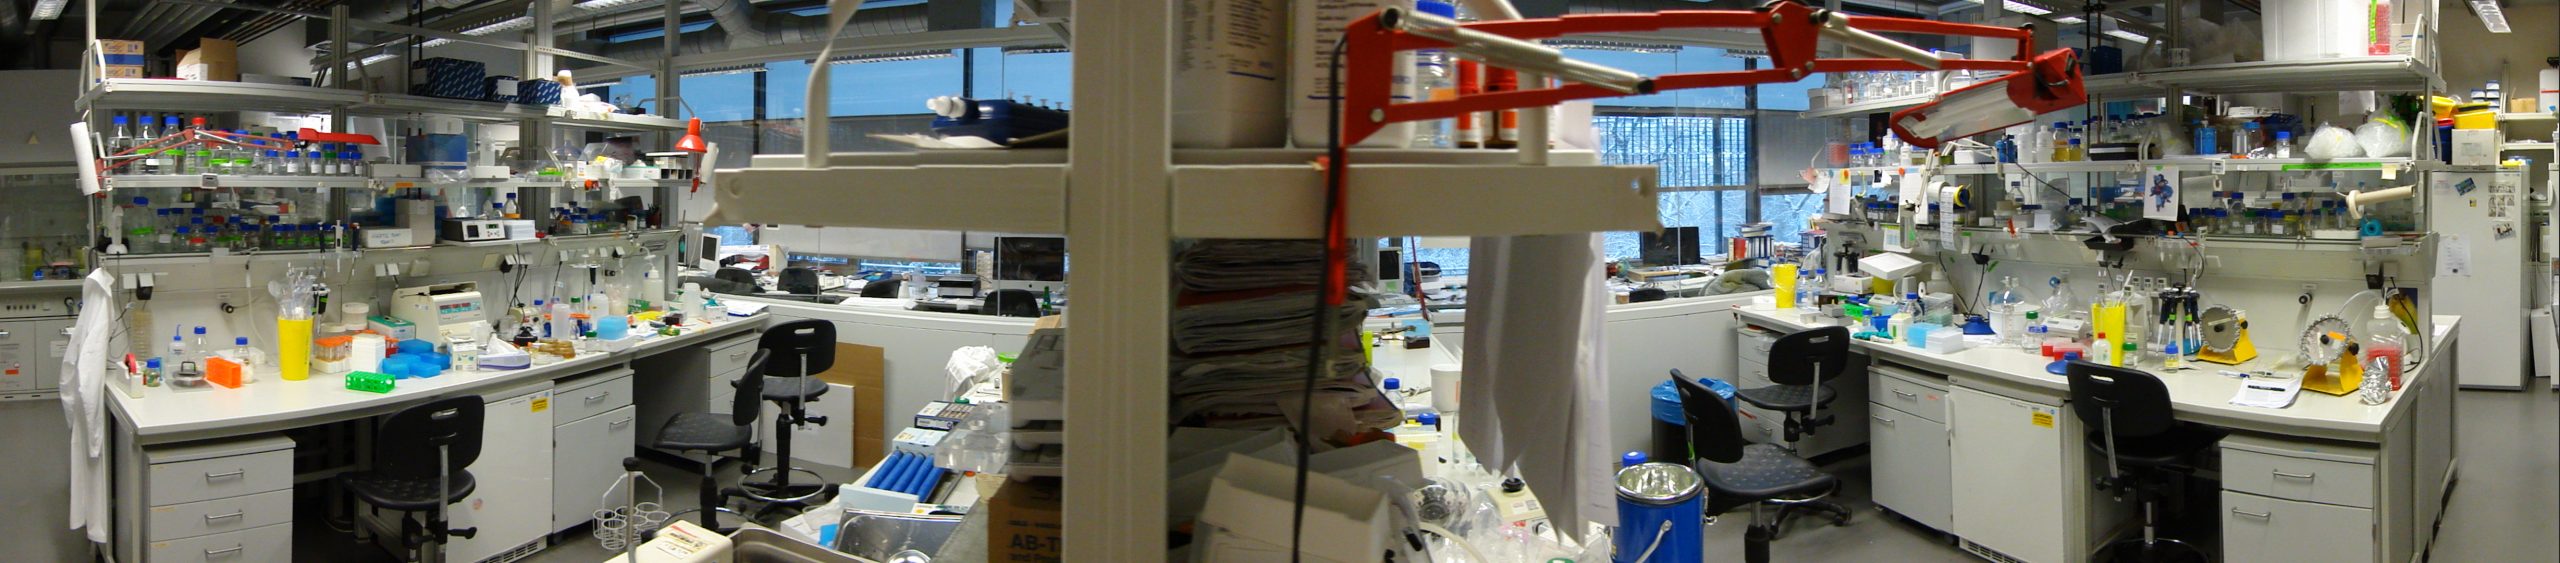 Biochemistry_laboratory_MPI-CBG-panorama